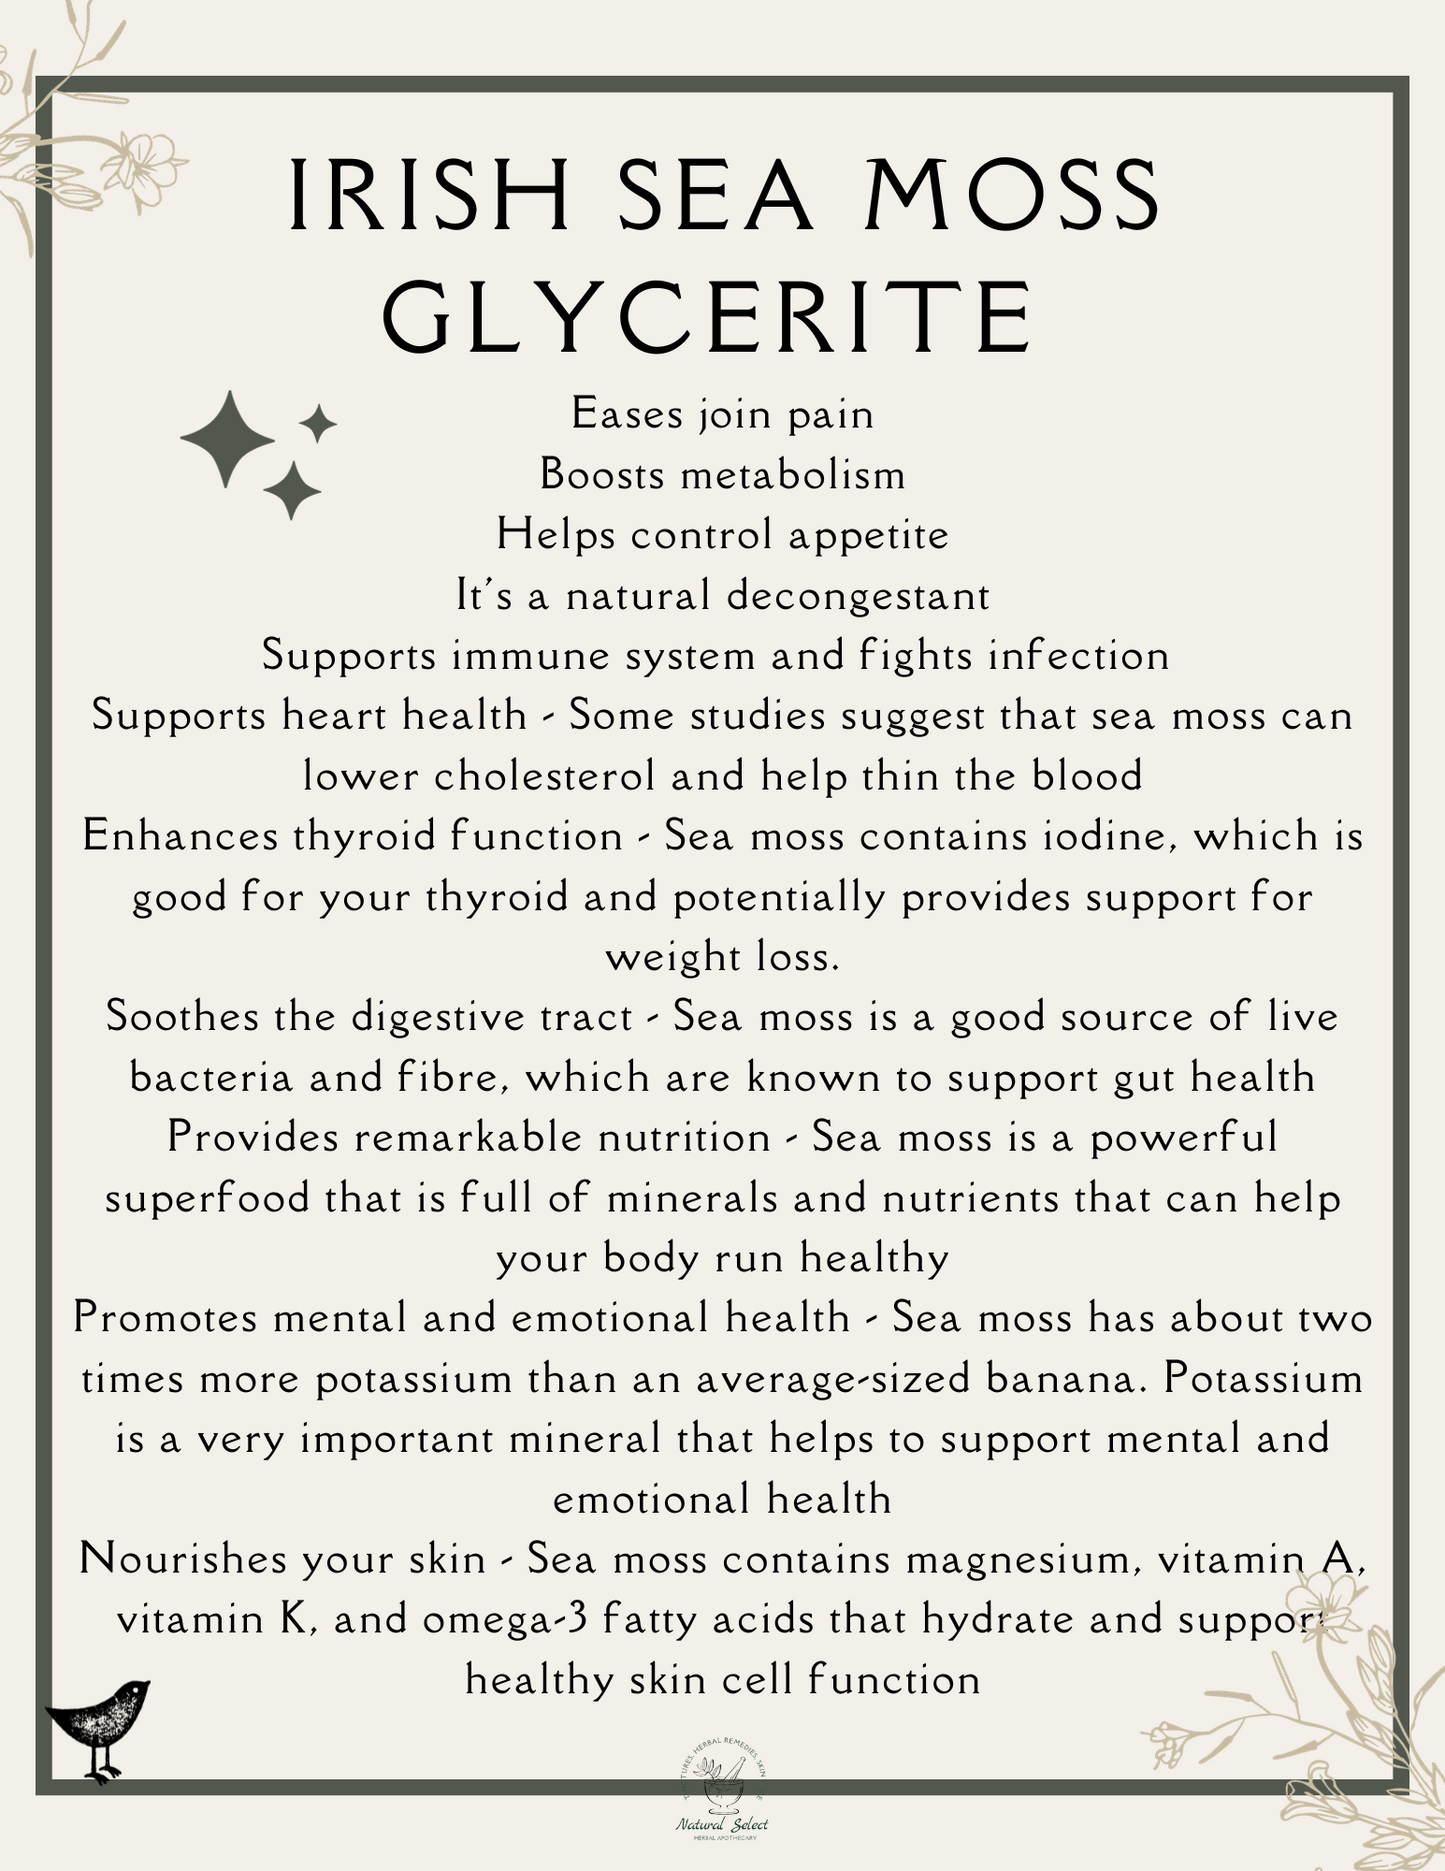 Irish Sea Moss Glycerite